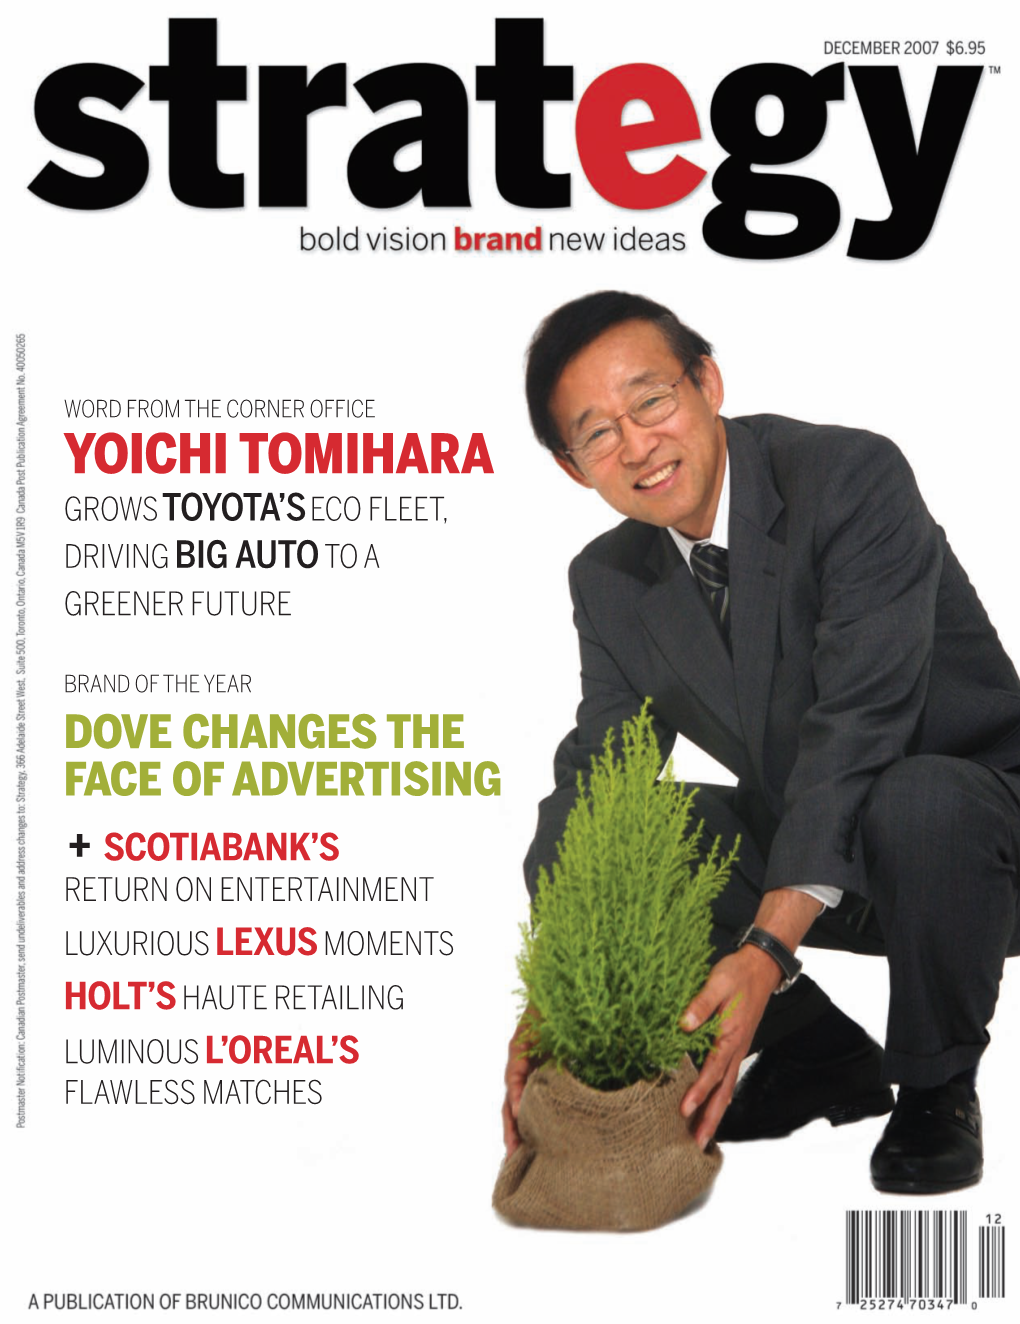 Yoichi Tomihara Grows Toyota’S Eco Fleet, Driving Big Auto to a Greener Future